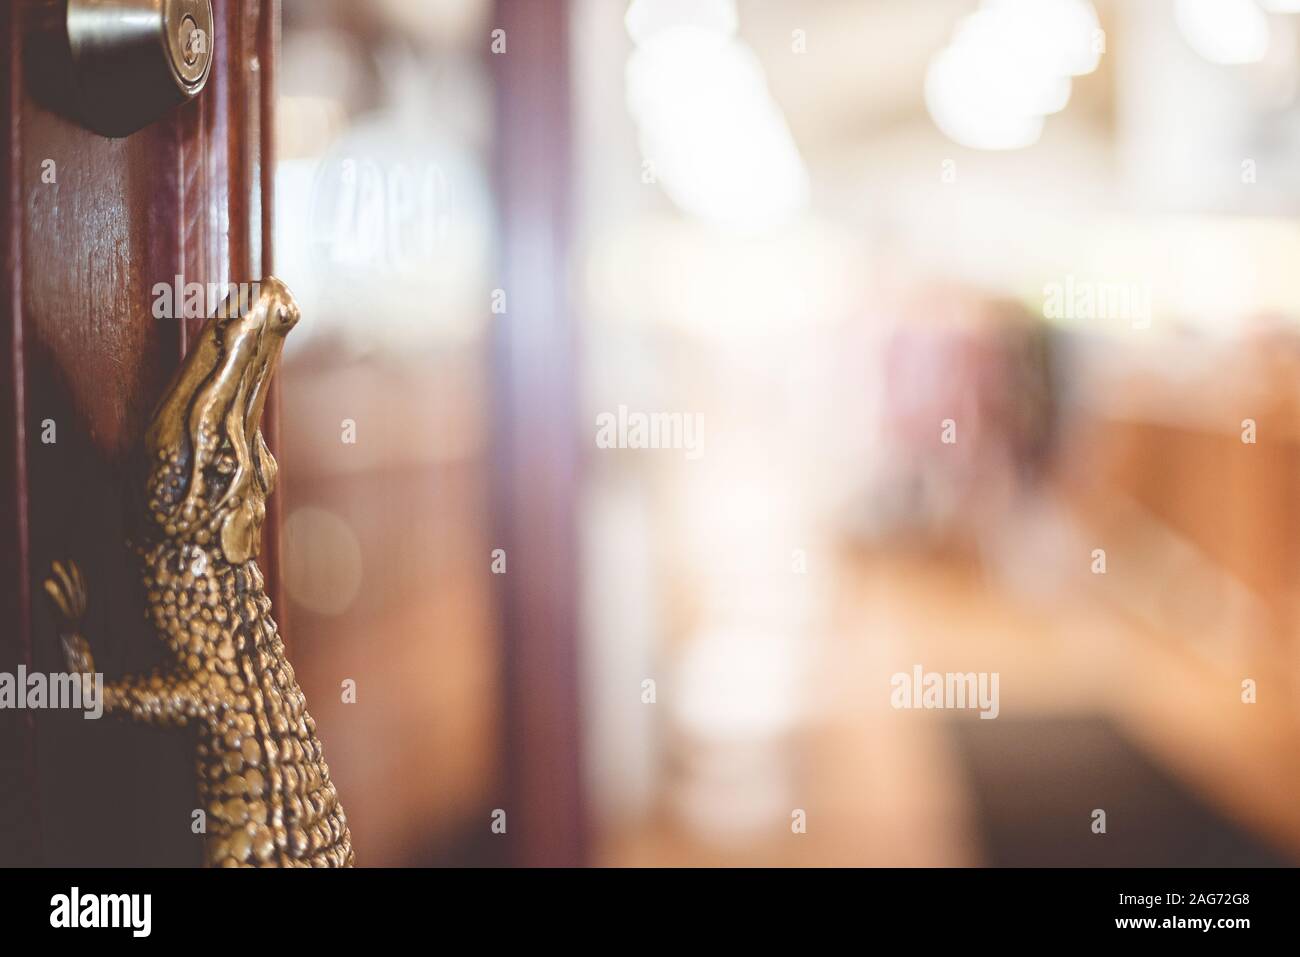 Closeup shot of a golden alligator handlebar for the door Stock Photo